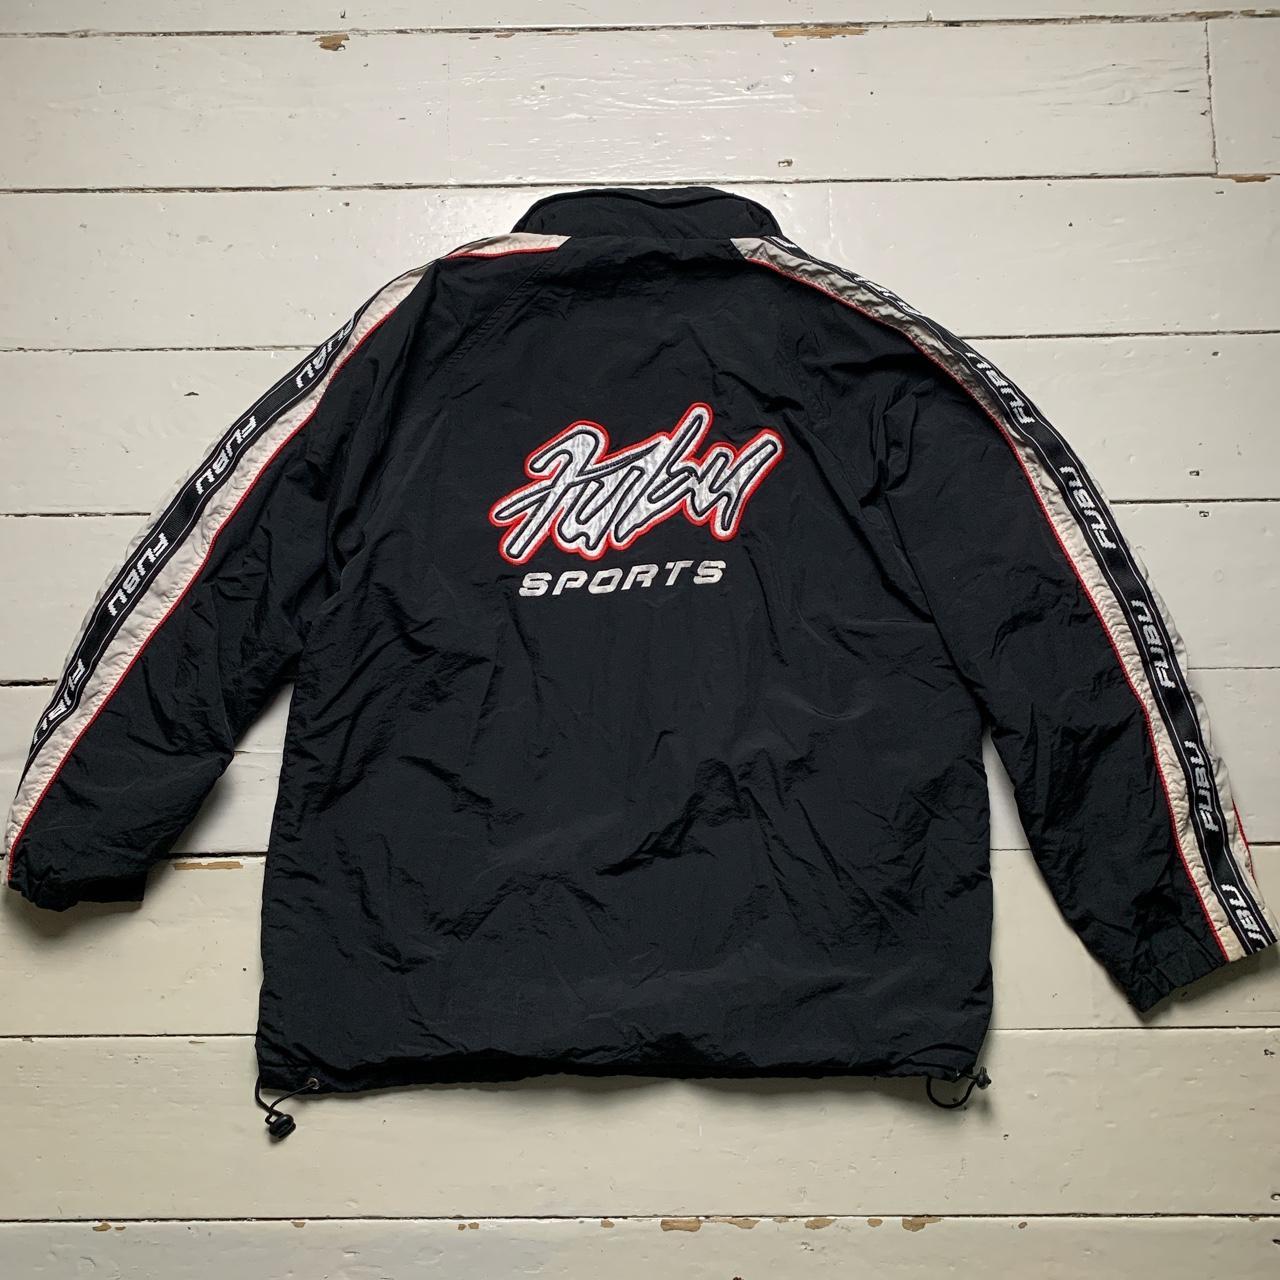 Fubu Sports Vintage Jacket Black White Red 🌪 In... - Depop